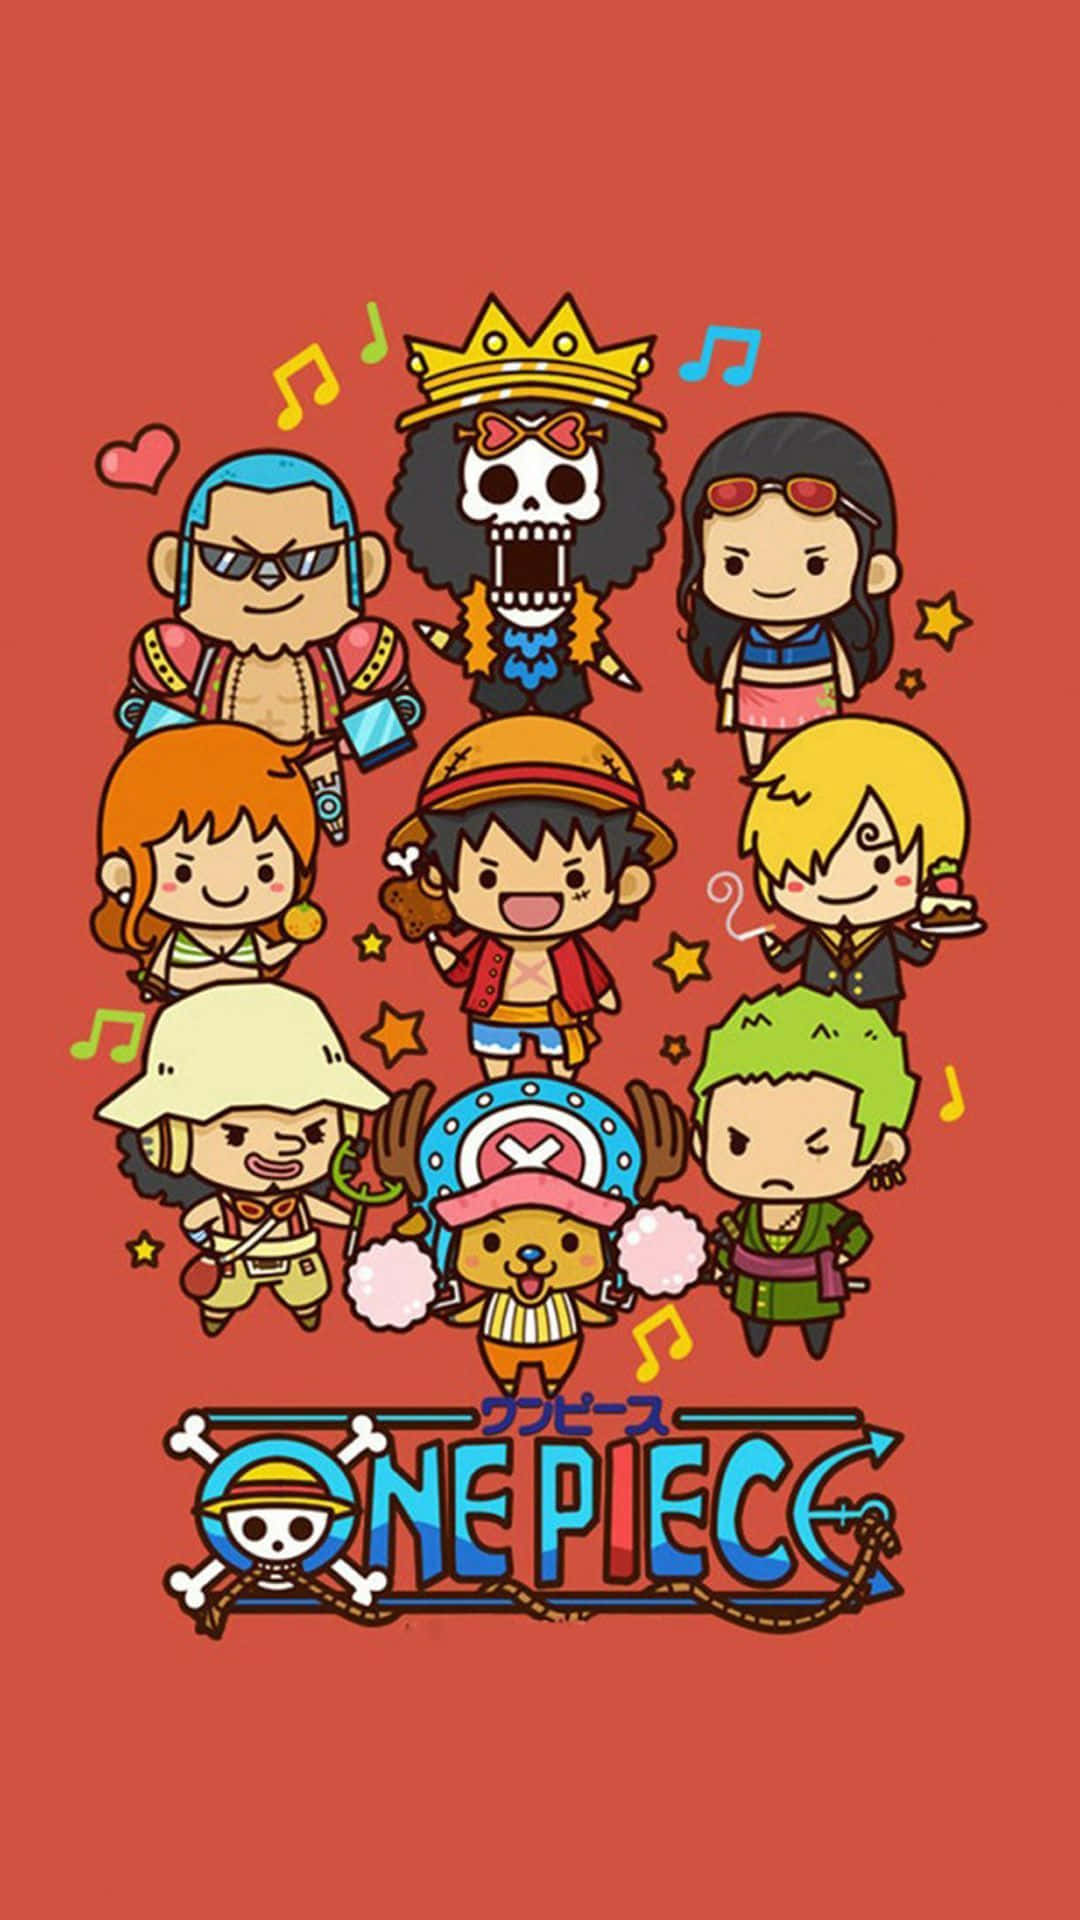 One Piece Characters: Luffy, Zoro, Nami, Sanji, and Chopper Wallpaper